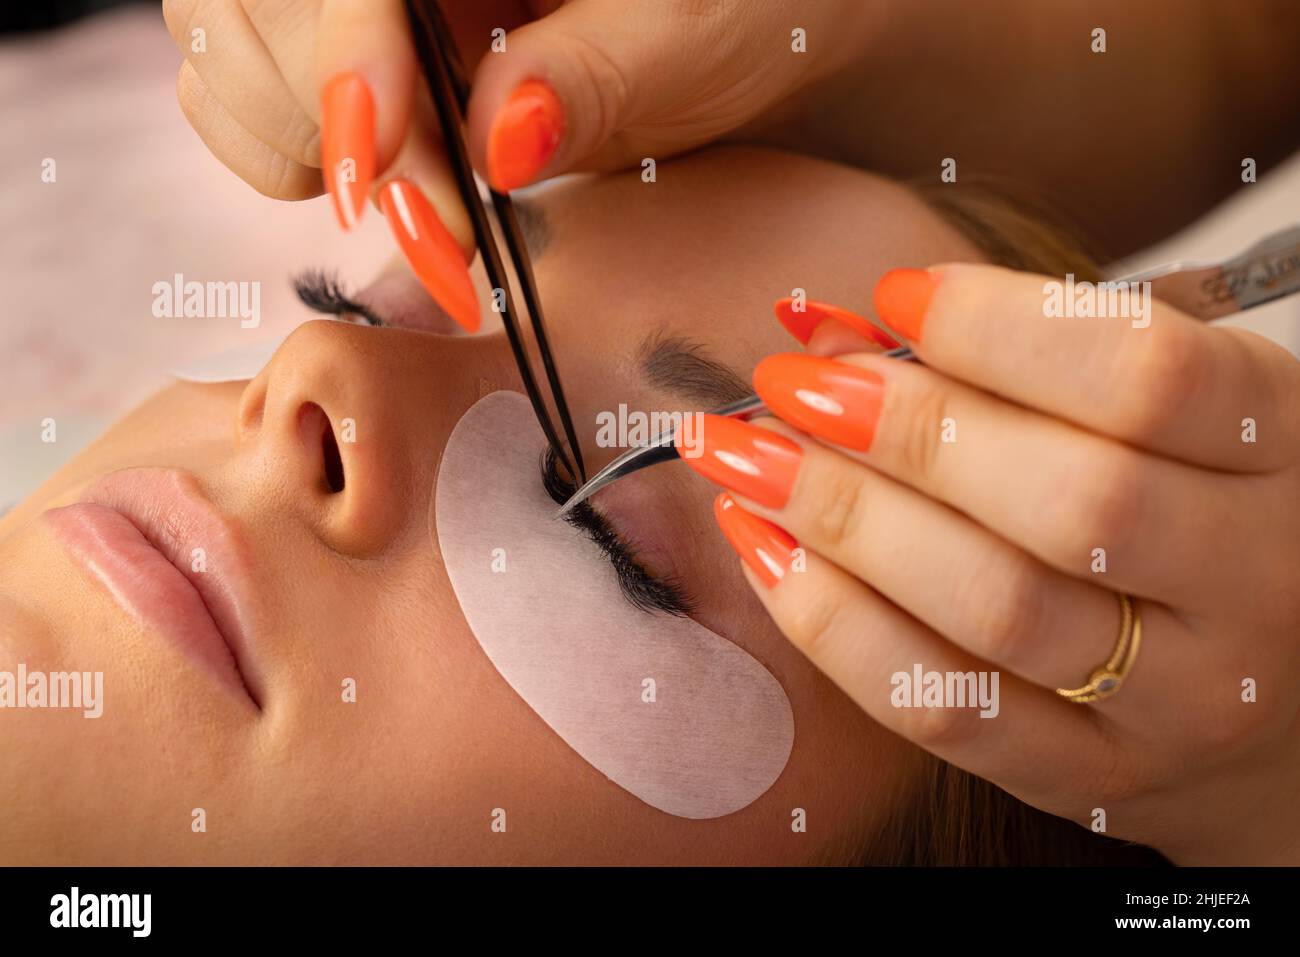 Hands Of Beautician Using Tweezers For Applying False Eyelashes Stock Photo